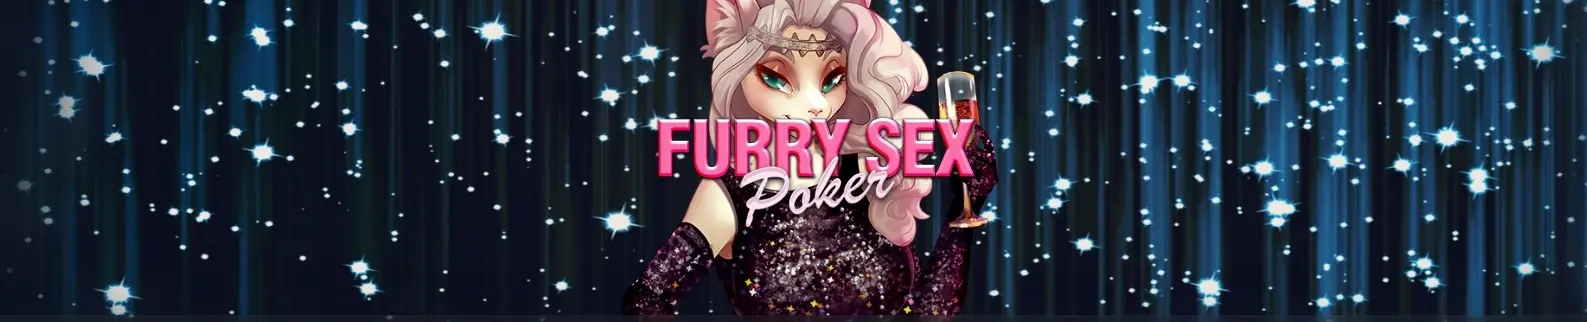 Furry Sex: Poker main image